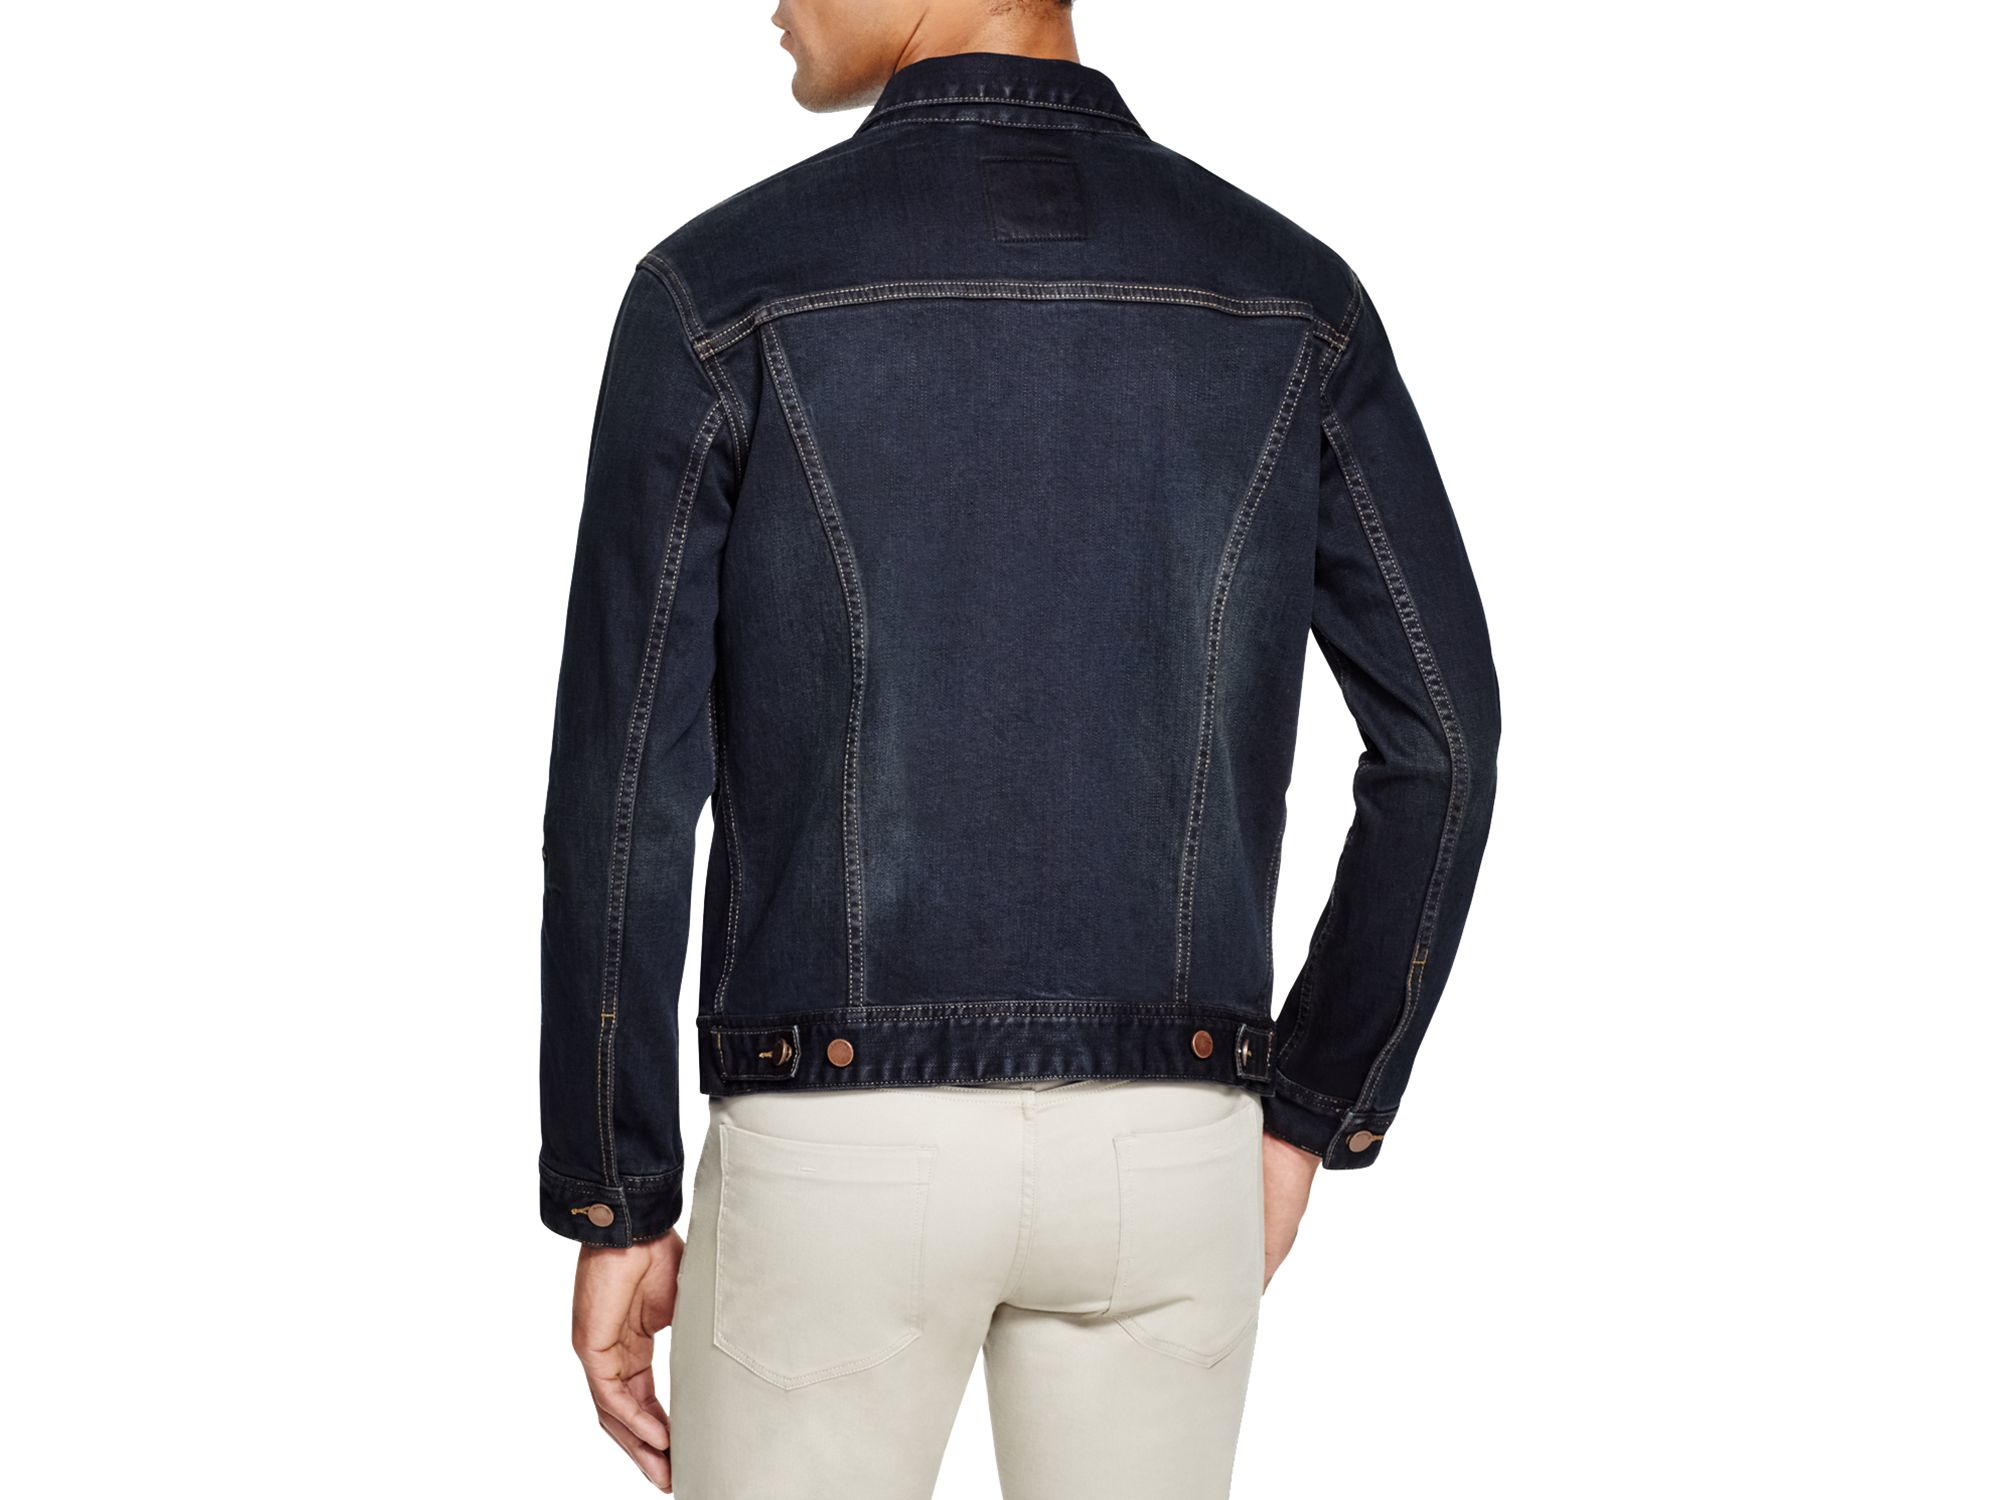 Lyst - Blank Vintage Slim Fit Jean Jacket in Blue for Men